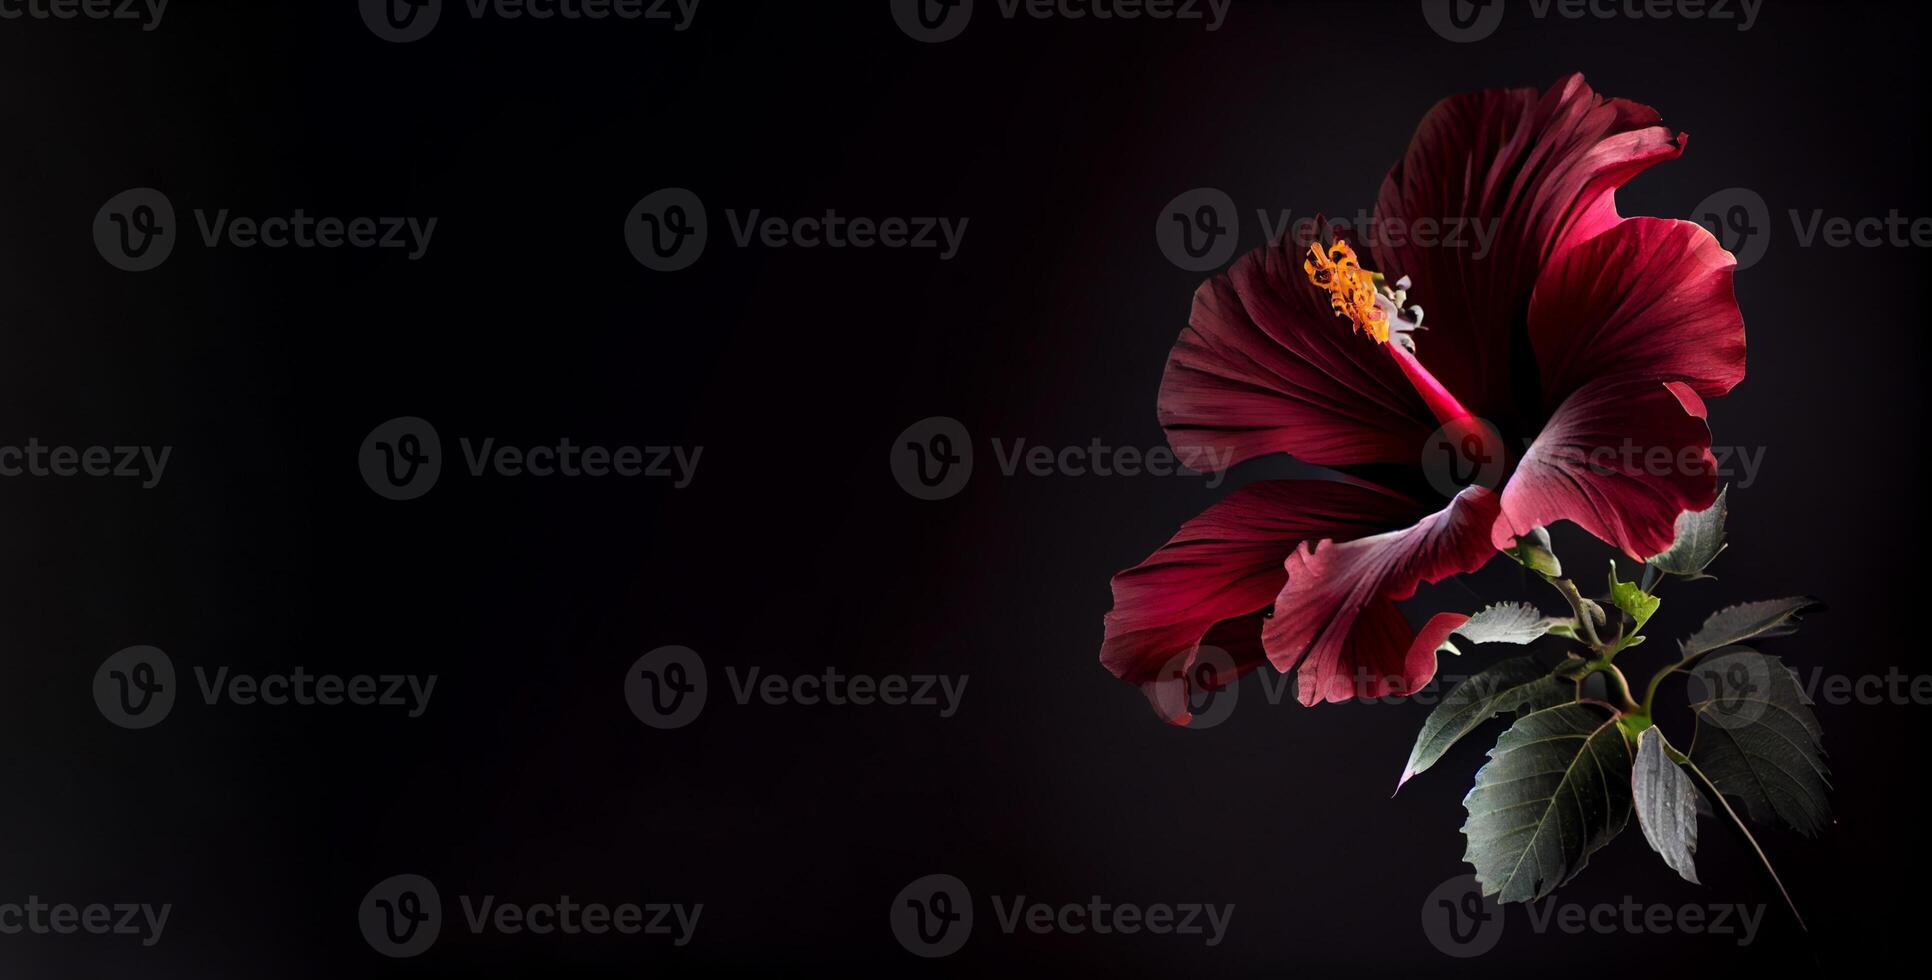 donker petunia bloem in zwart achtergrond ai gegenereerd foto